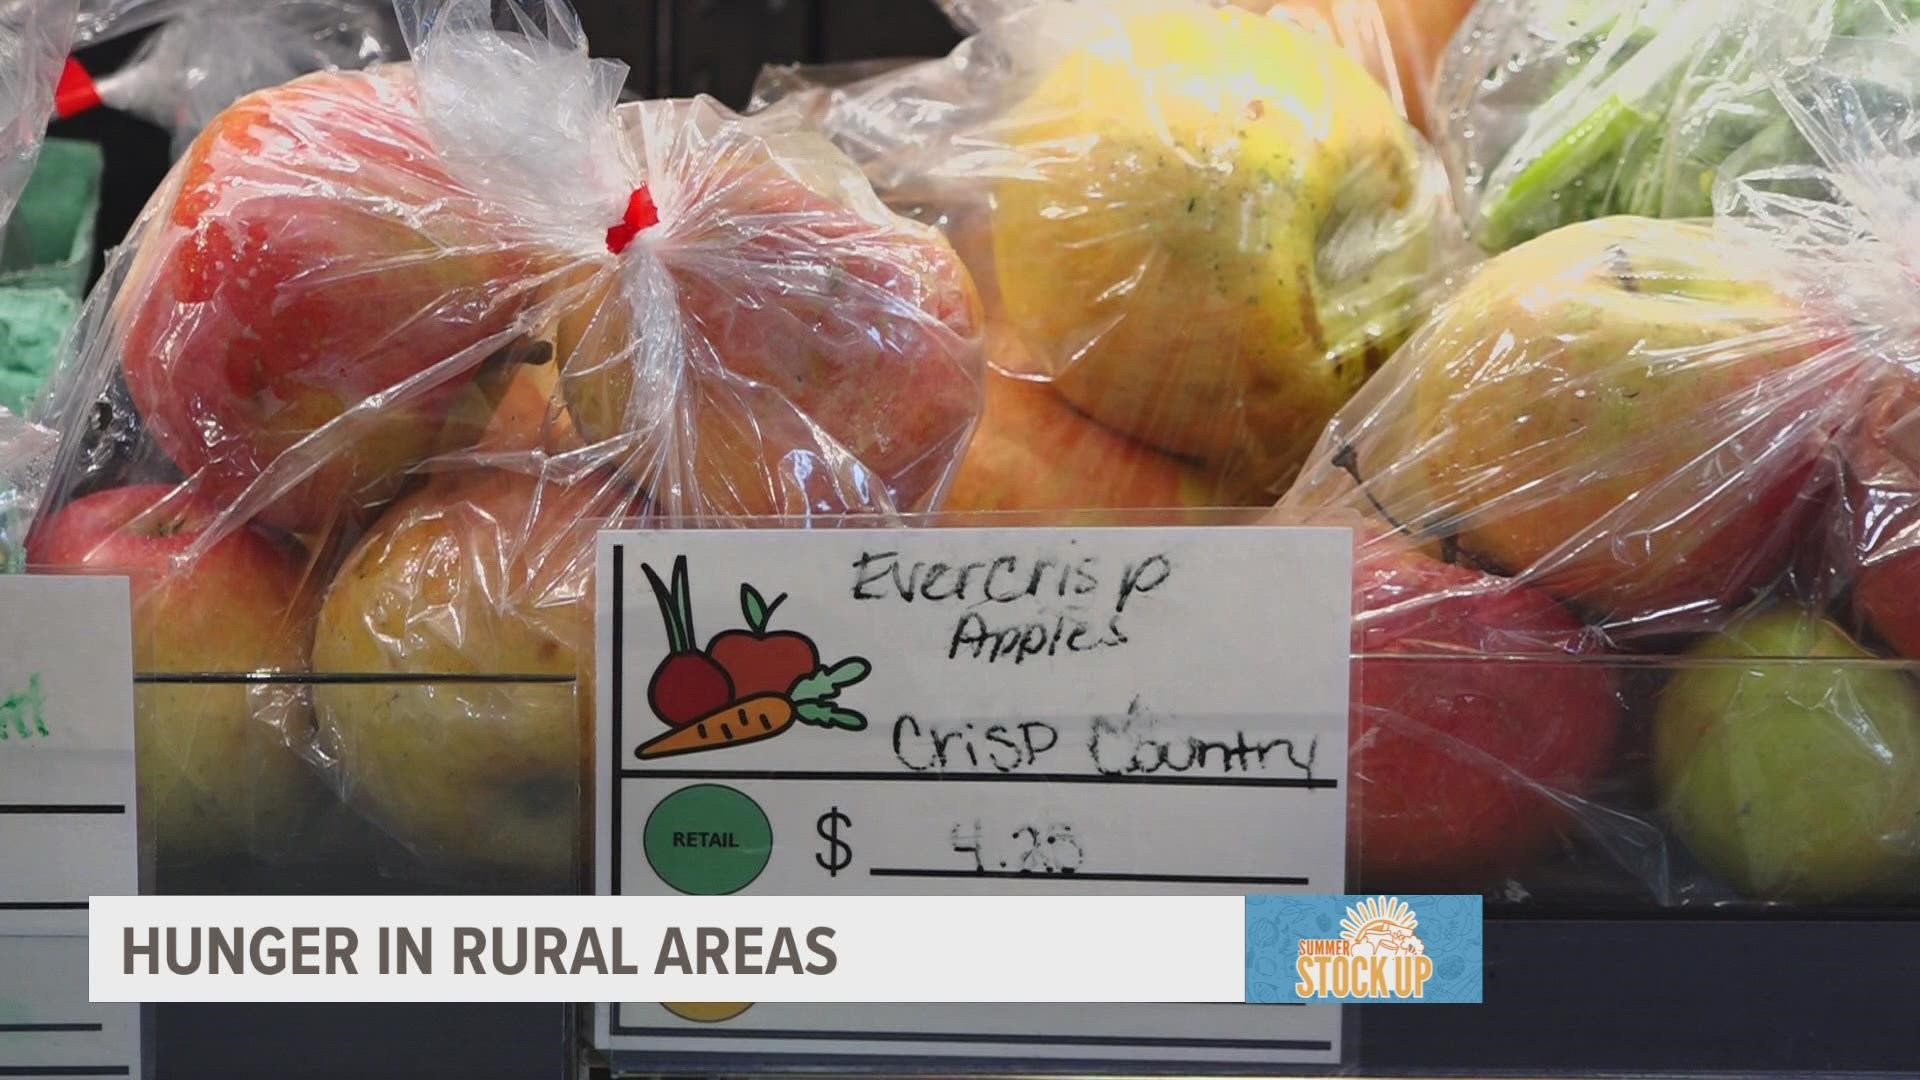 People living in rural communities face economic challenges.